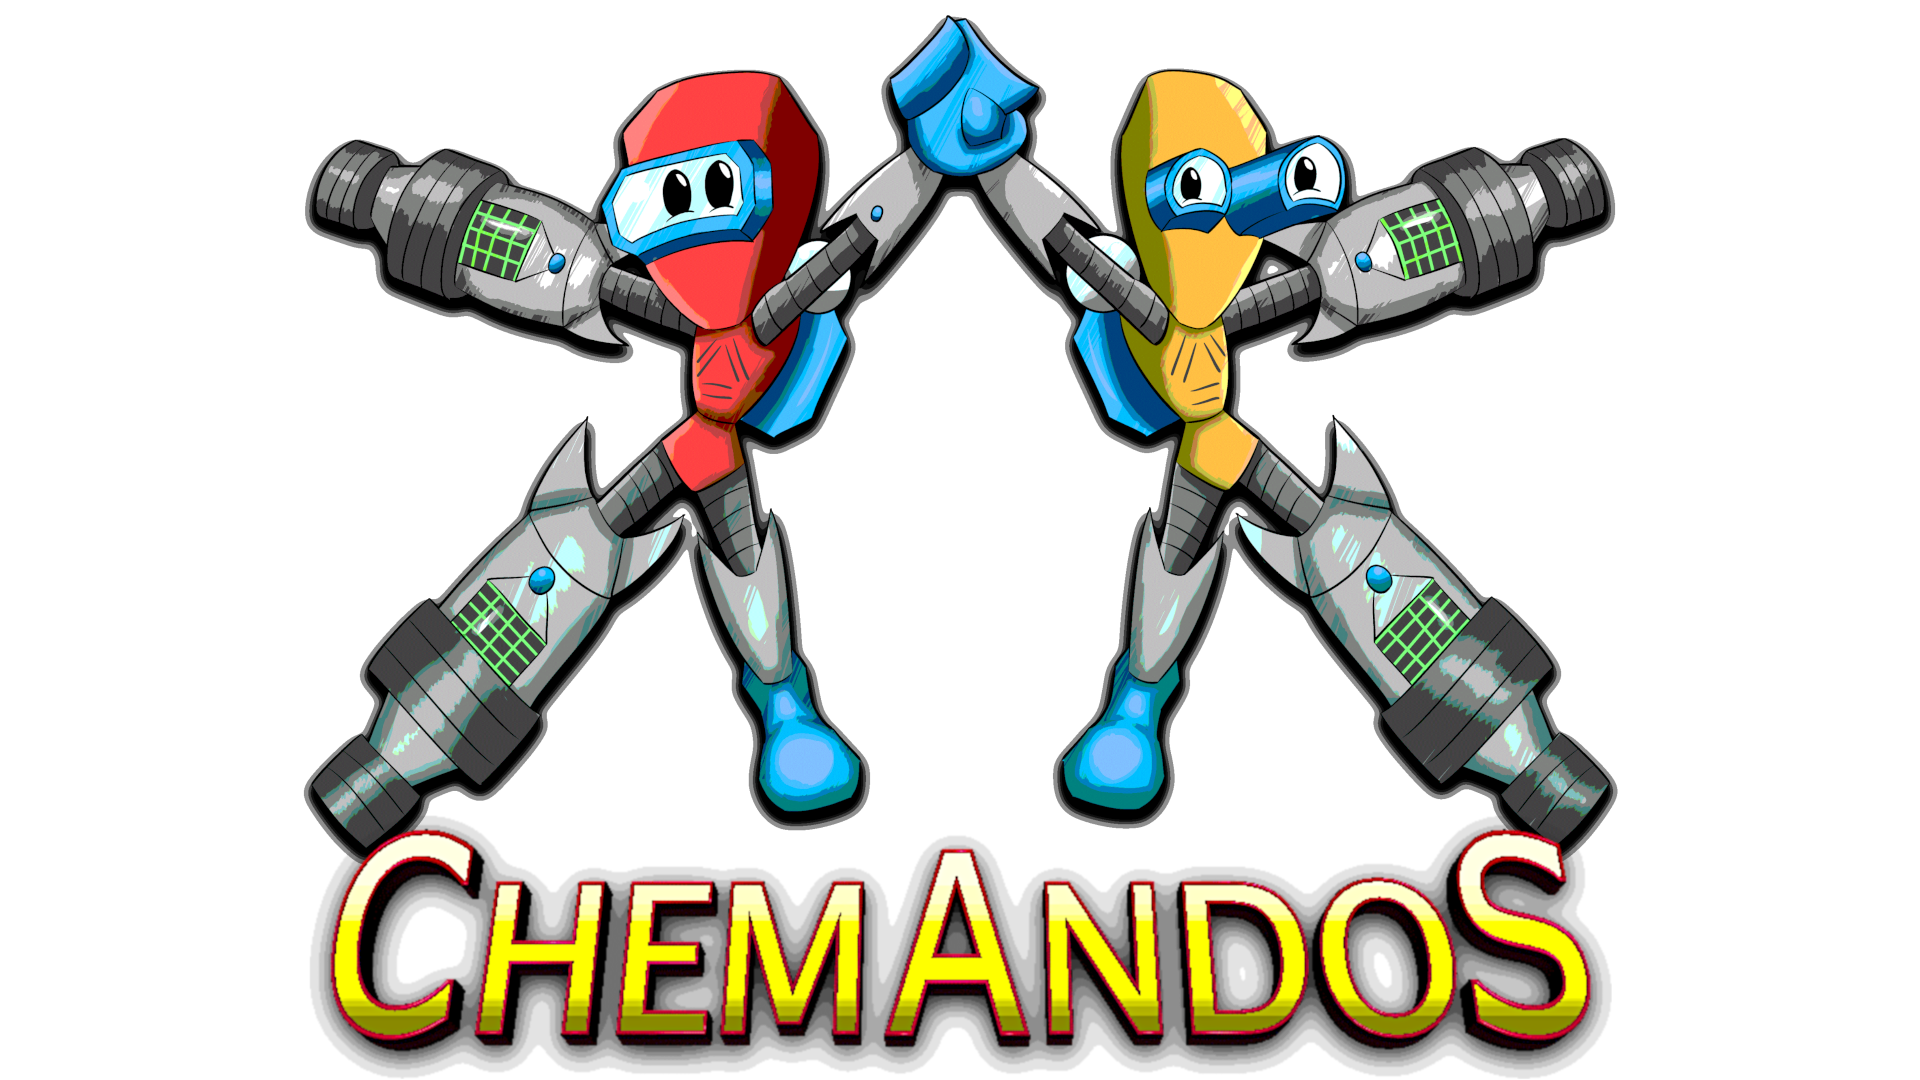 CHEMANDOS (Demo)